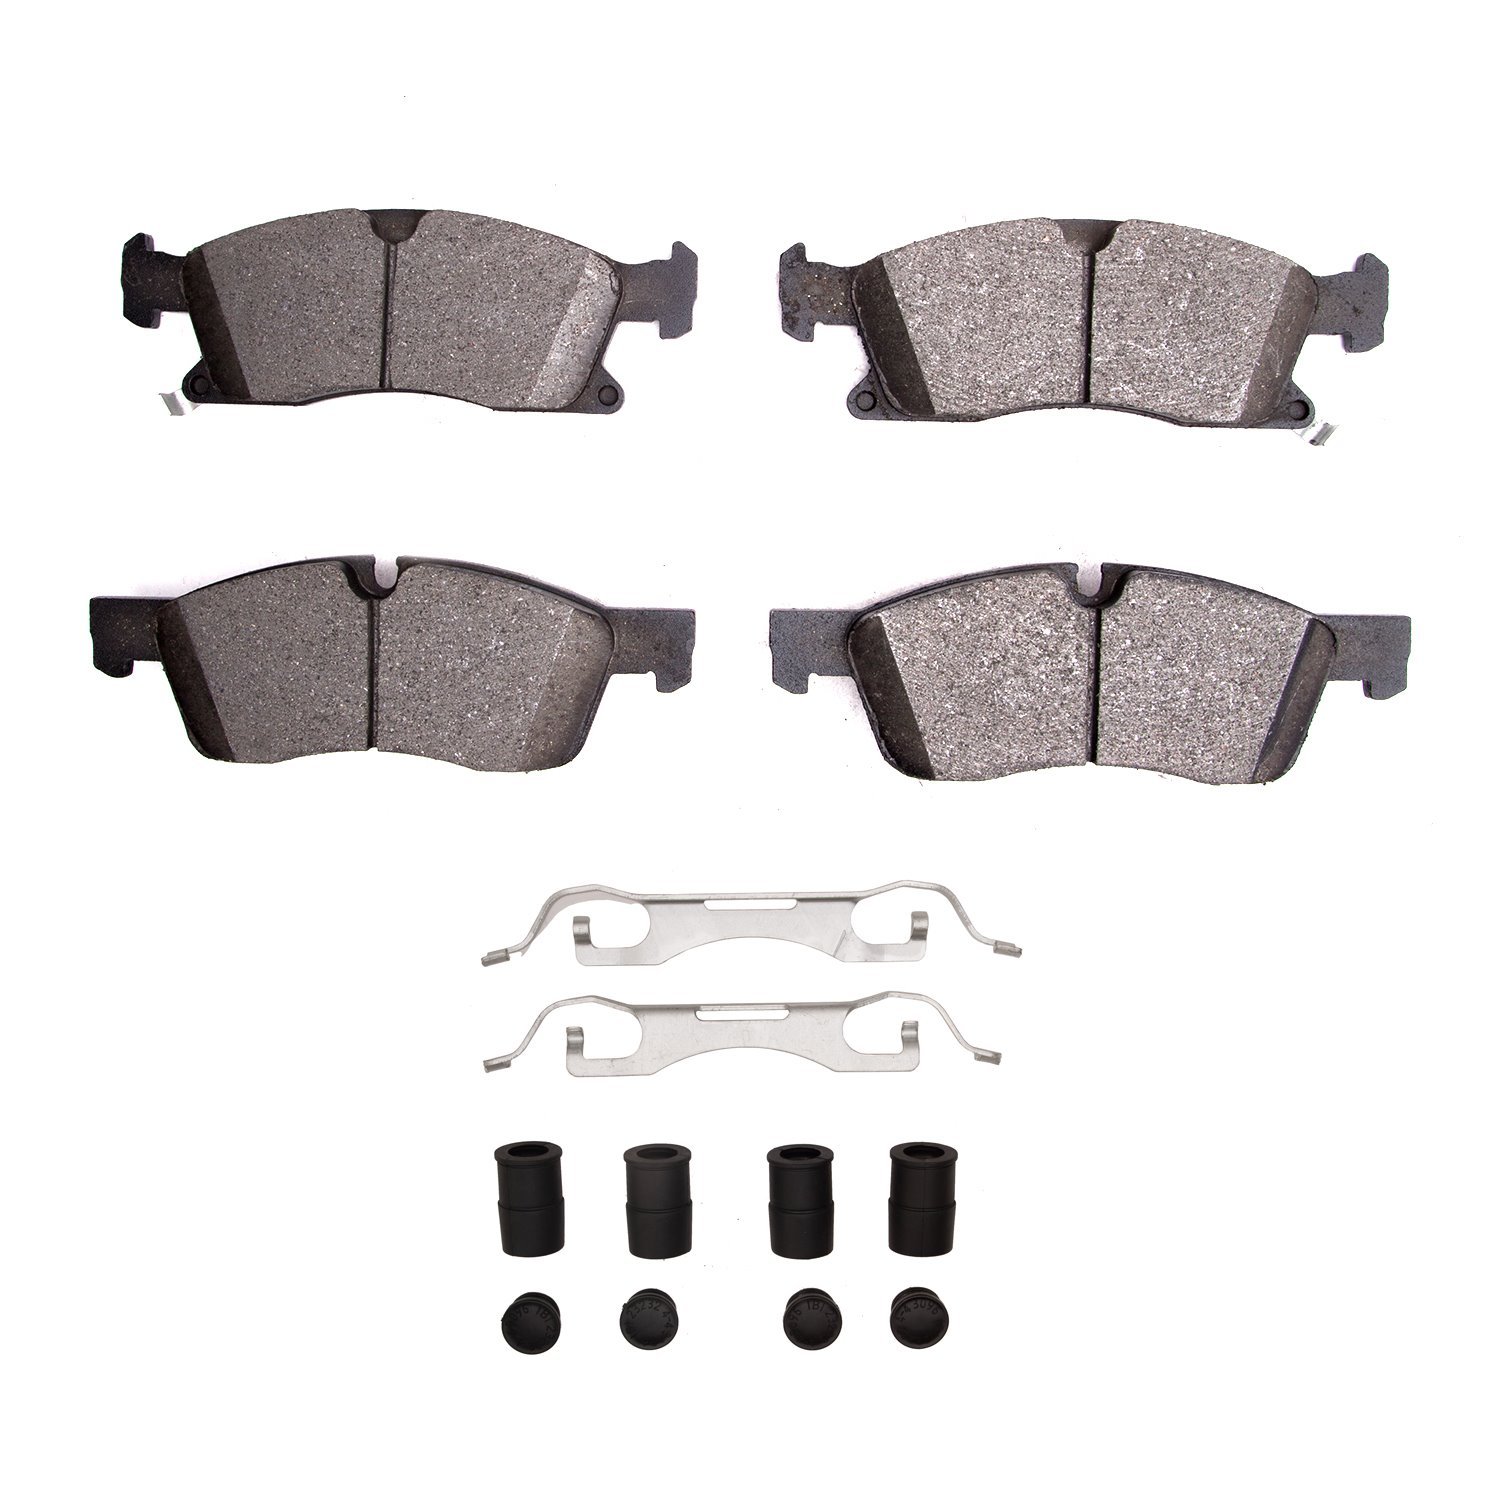 1310-1904-11 3000-Series Ceramic Brake Pads & Hardware Kit, Fits Select Multiple Makes/Models, Position: Front